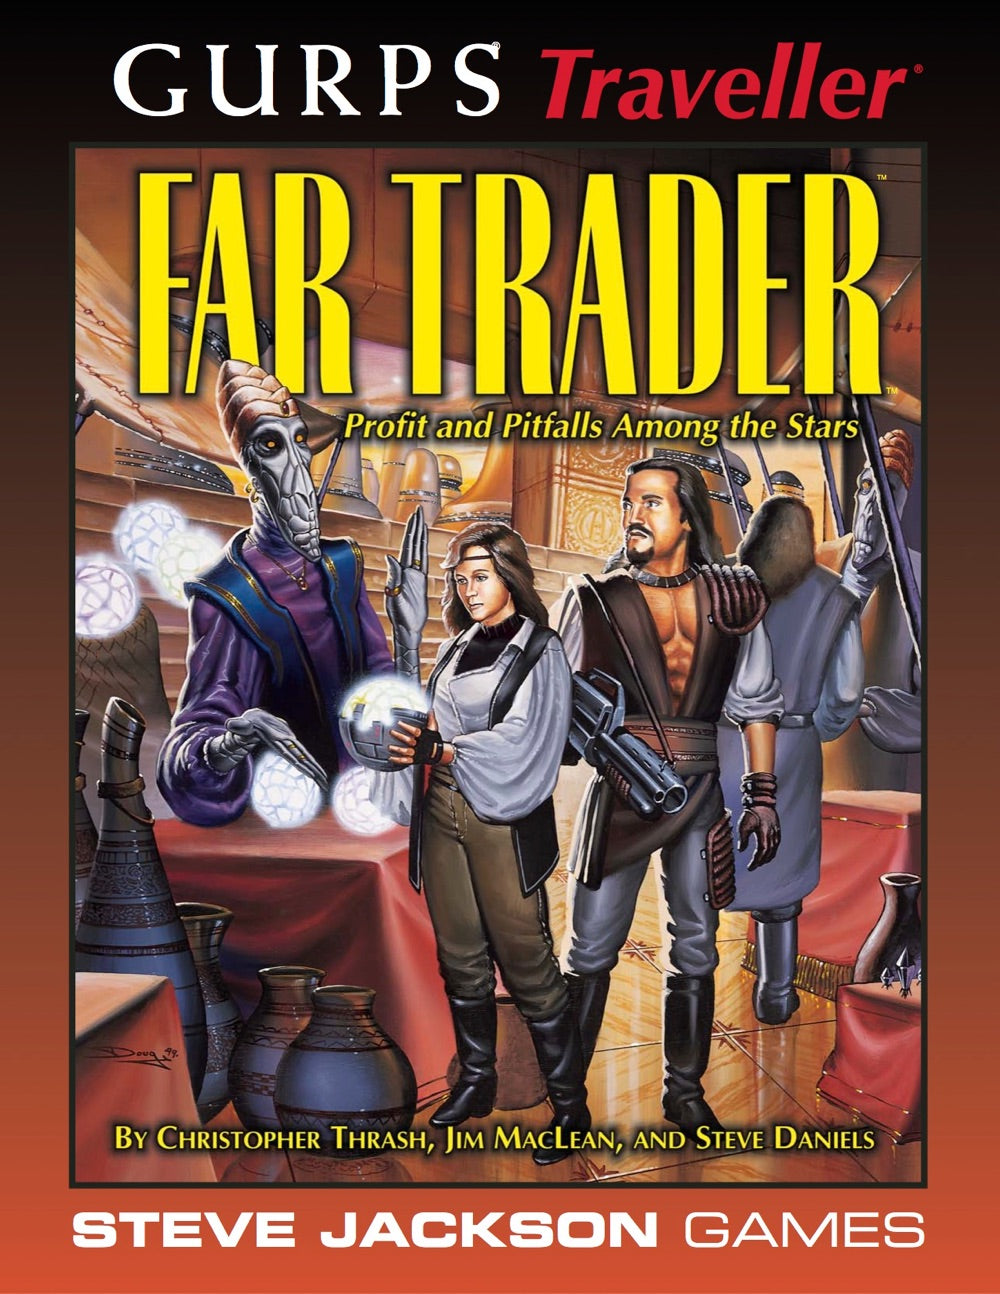 GURPS Traveller Classic: Far Trader